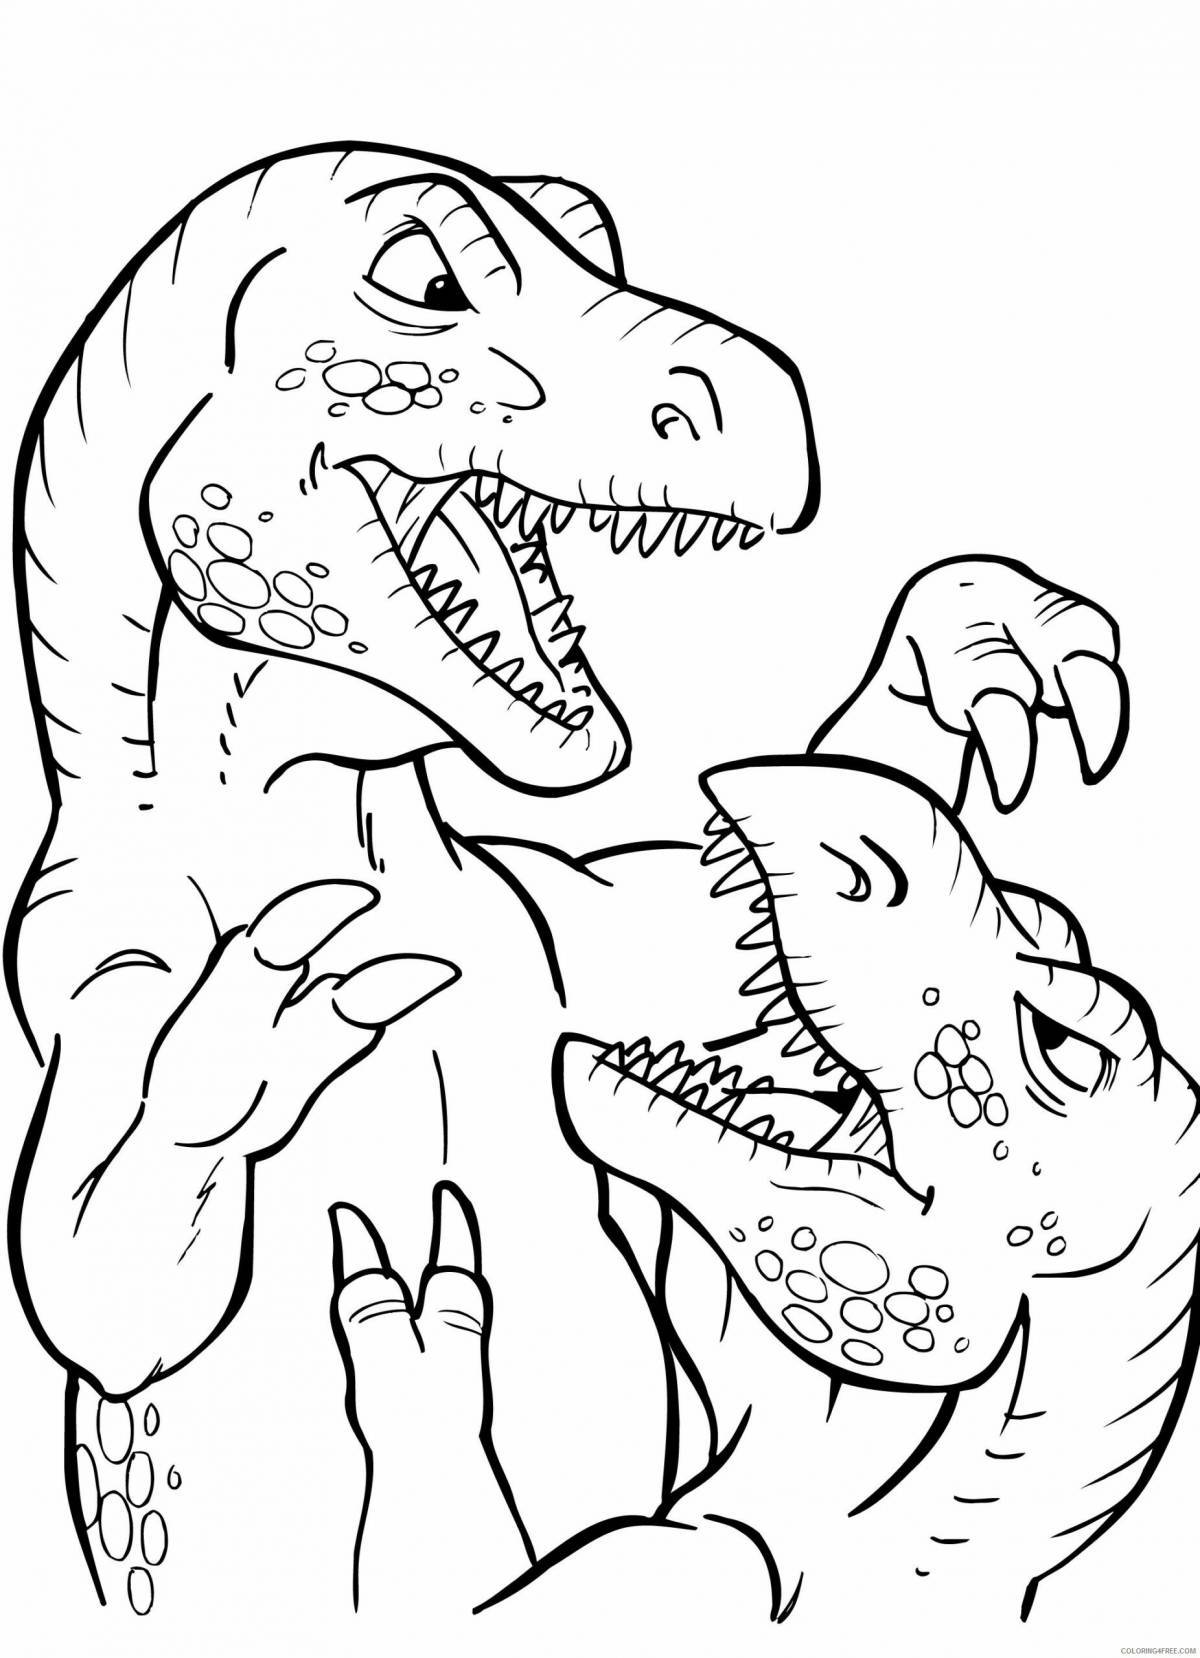 Large tyrannosaurus rex coloring page